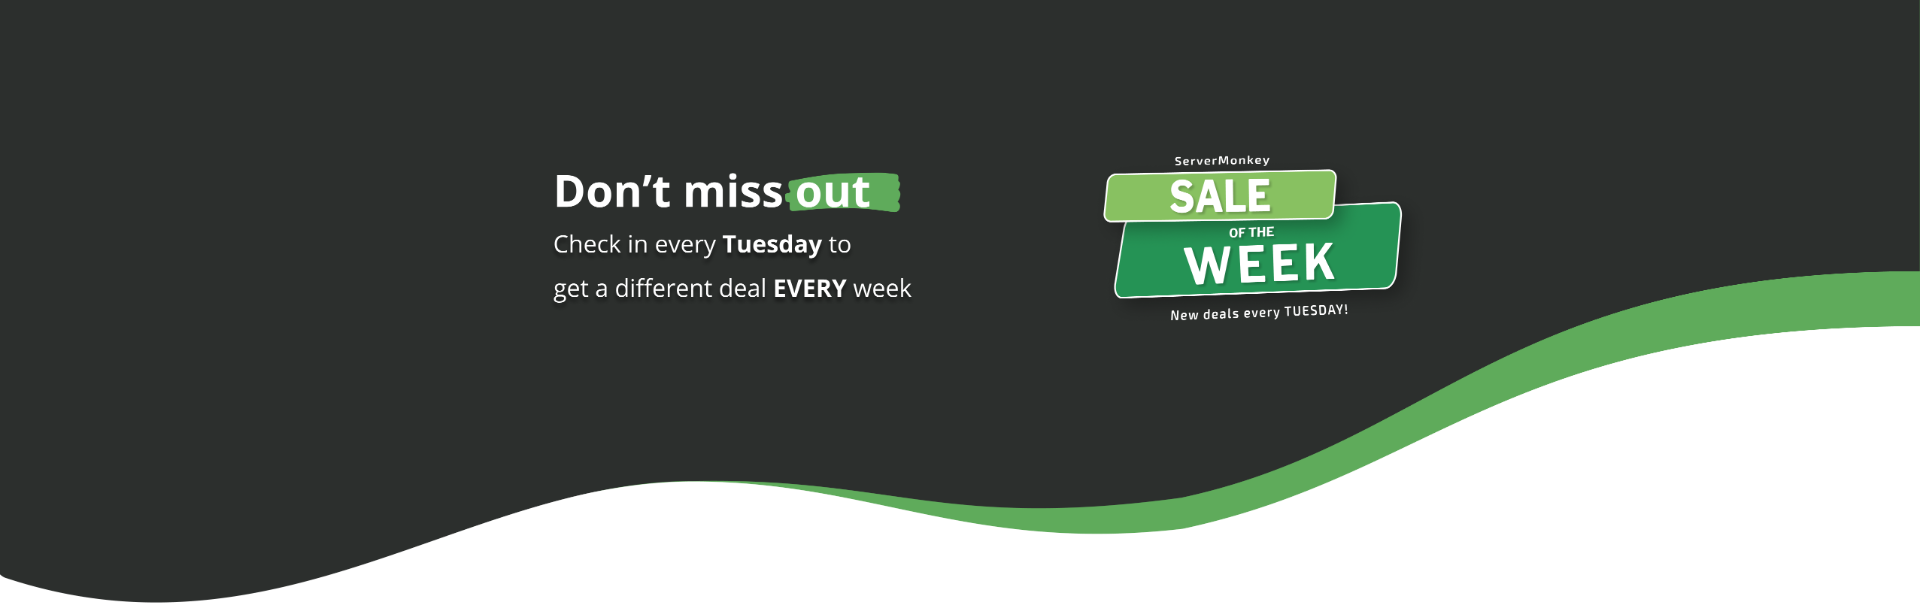 servermonkey sale of week banner